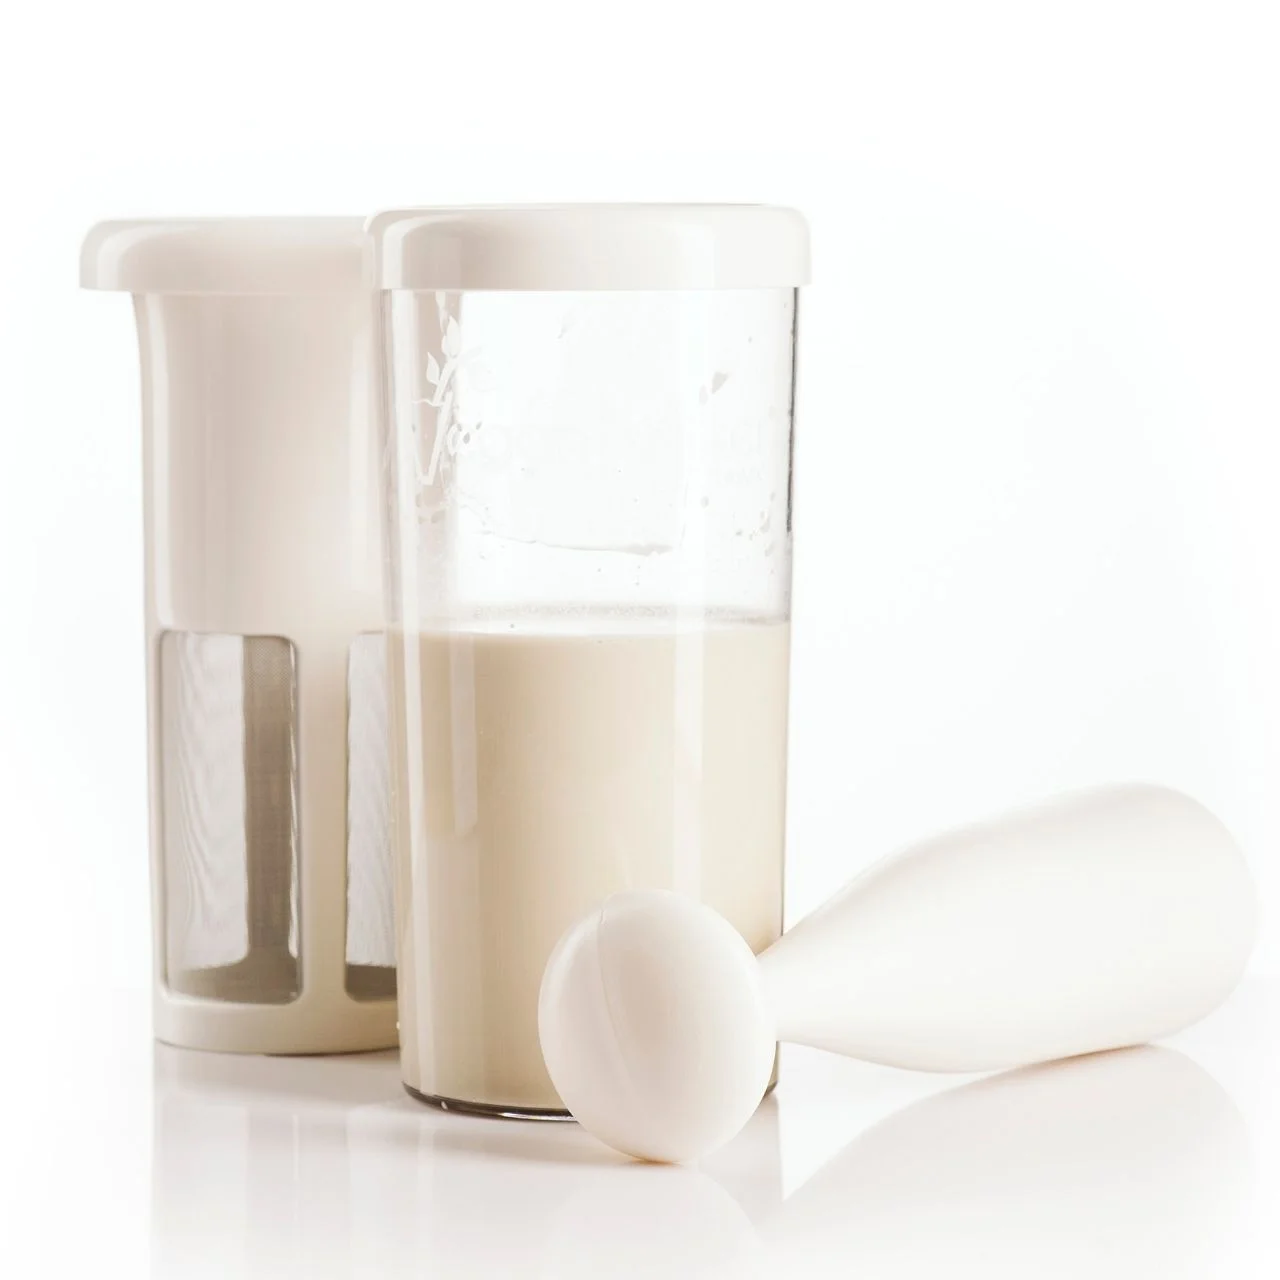 Vegan Milker Device Lets You Make Your Own Almond Milk, Oat Milk